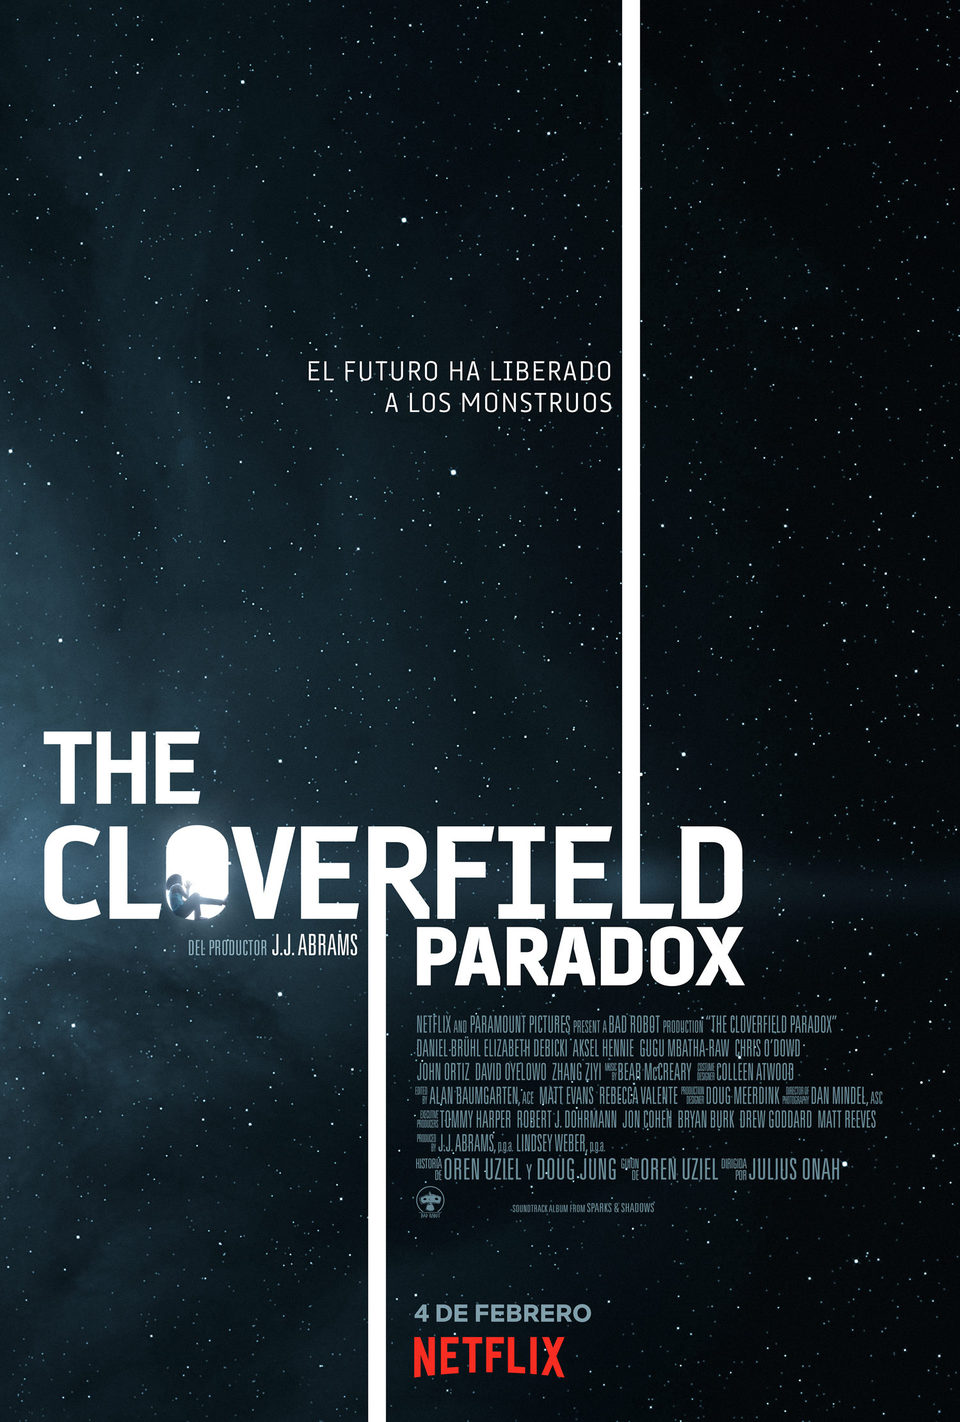 Cartel de The Cloverfield Paradox - Poster oficial